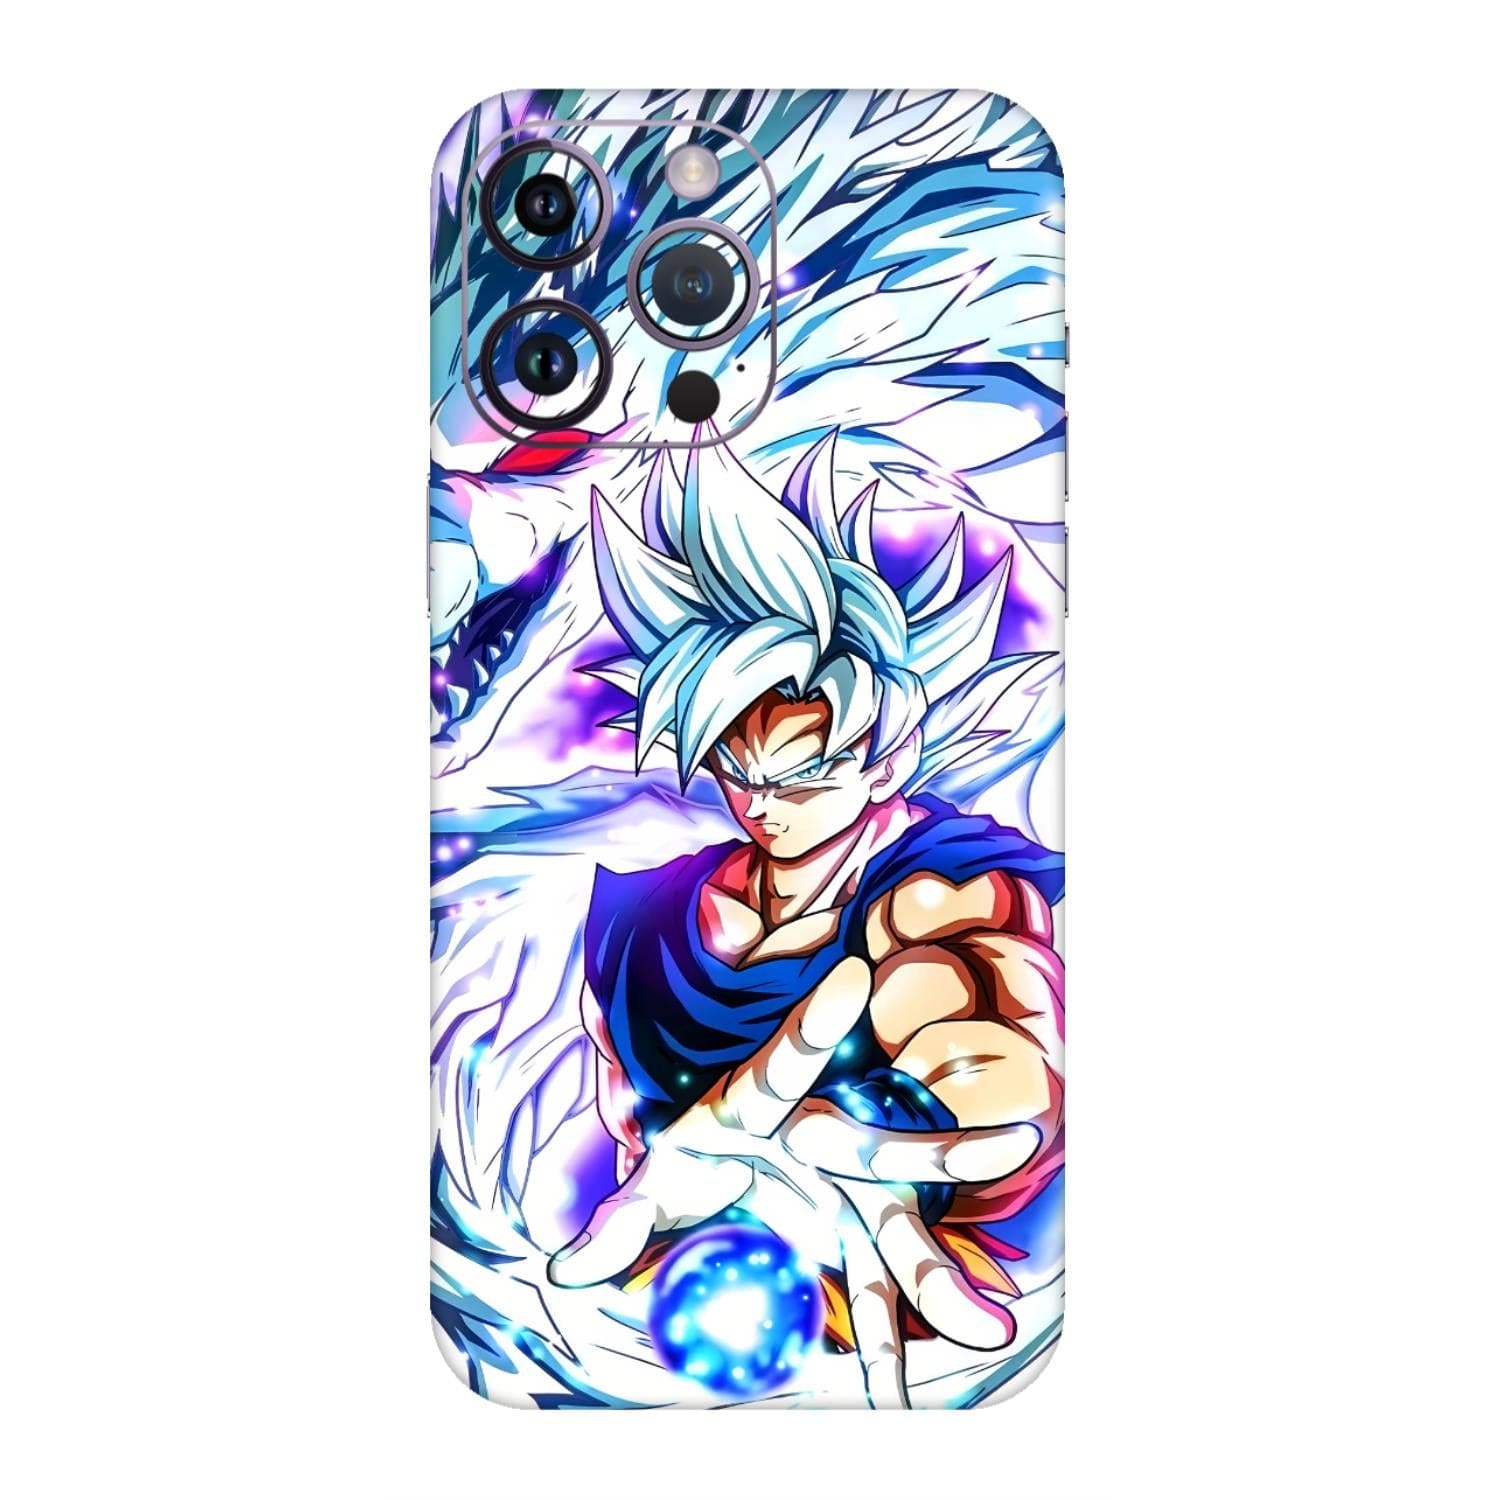 Supercharged Son Goku